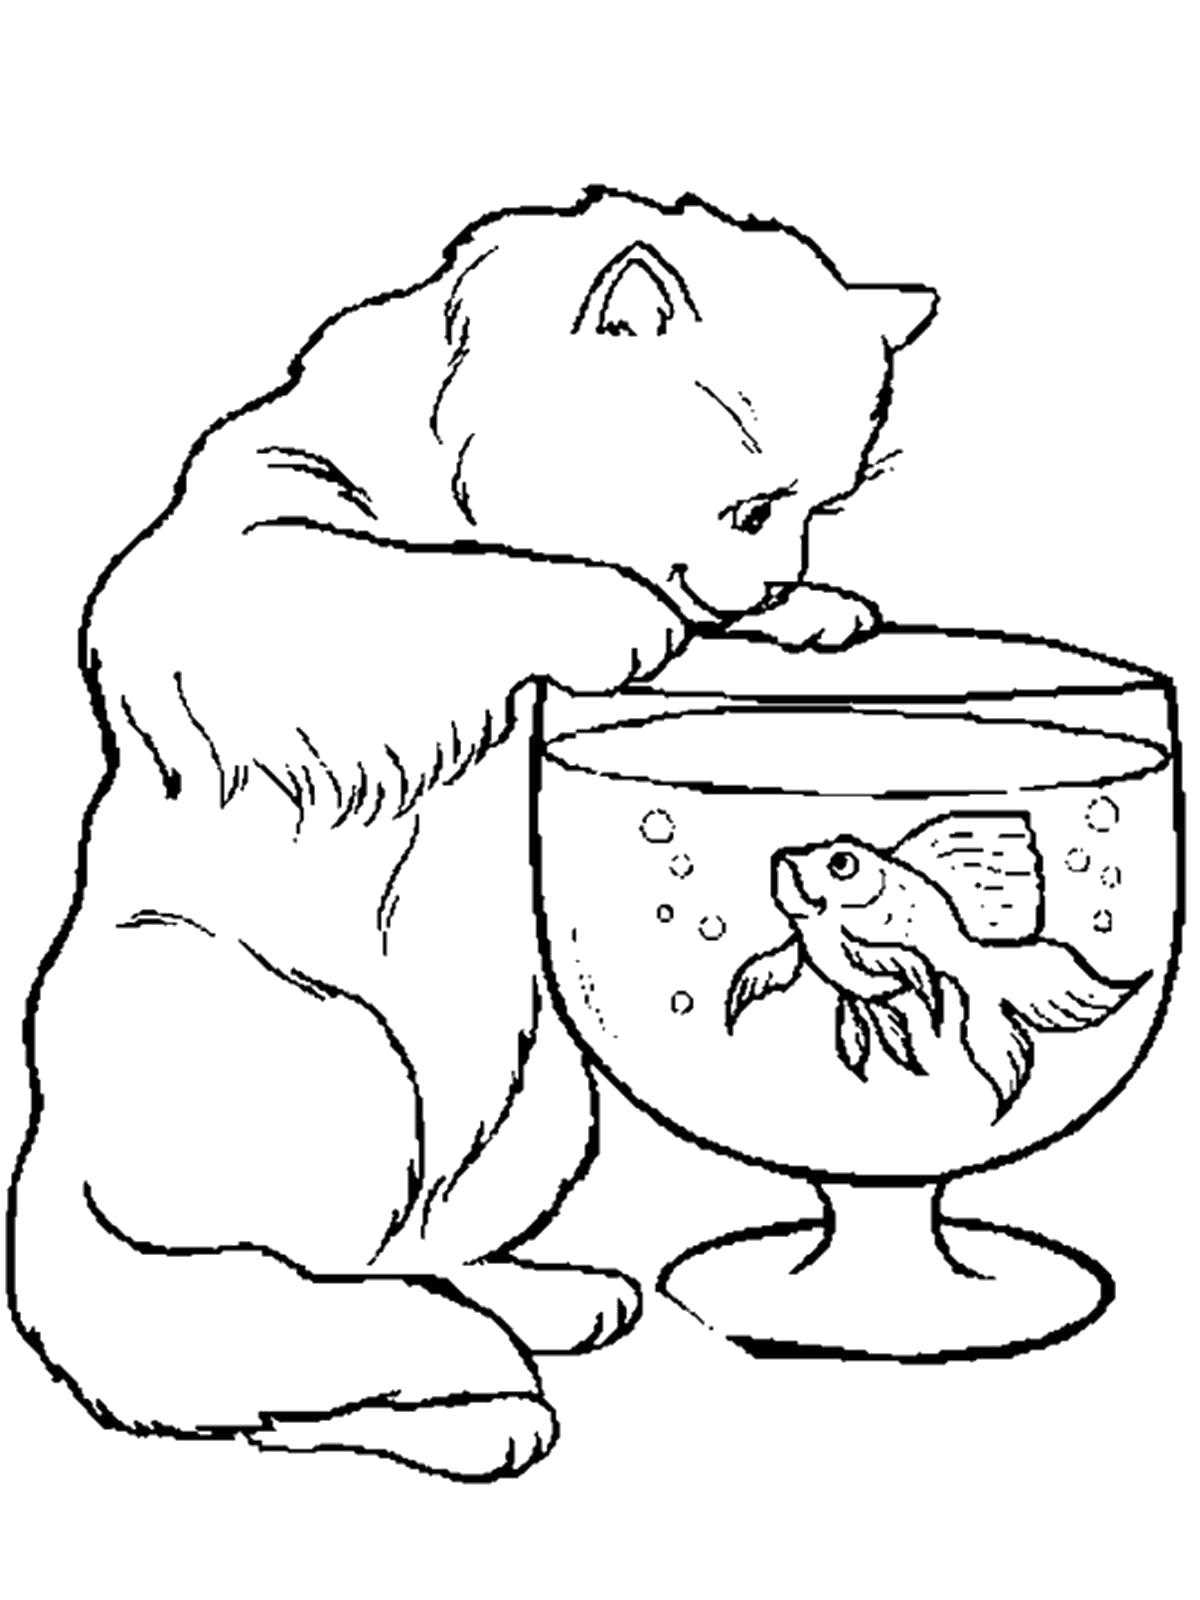   Кошка с рыбкой в аквариуме